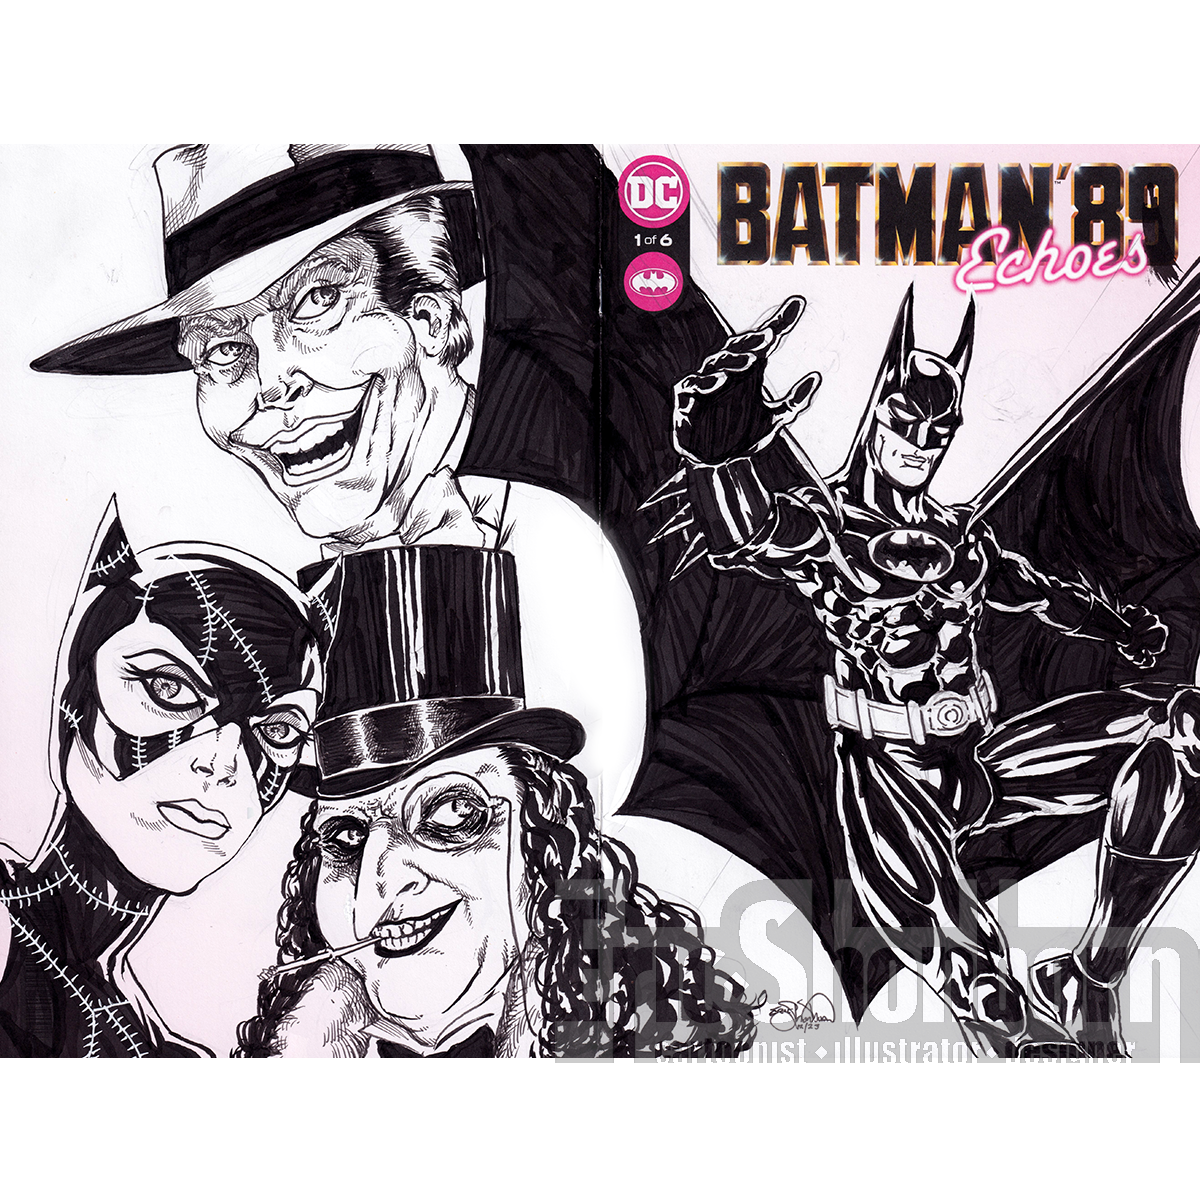 Batman ’89: Echoes